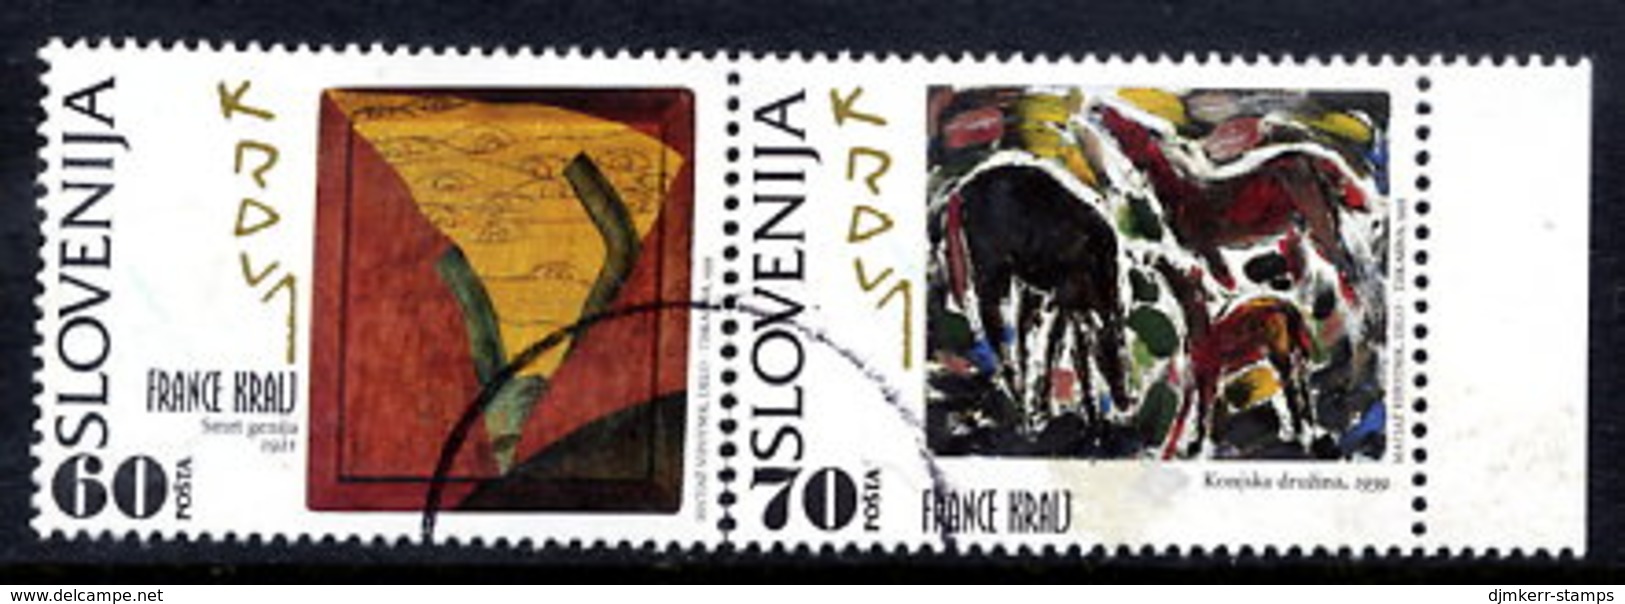 SLOVENIA 1995 France Kralj Centenary Pair.used.  Michel 121-22 - Slowenien